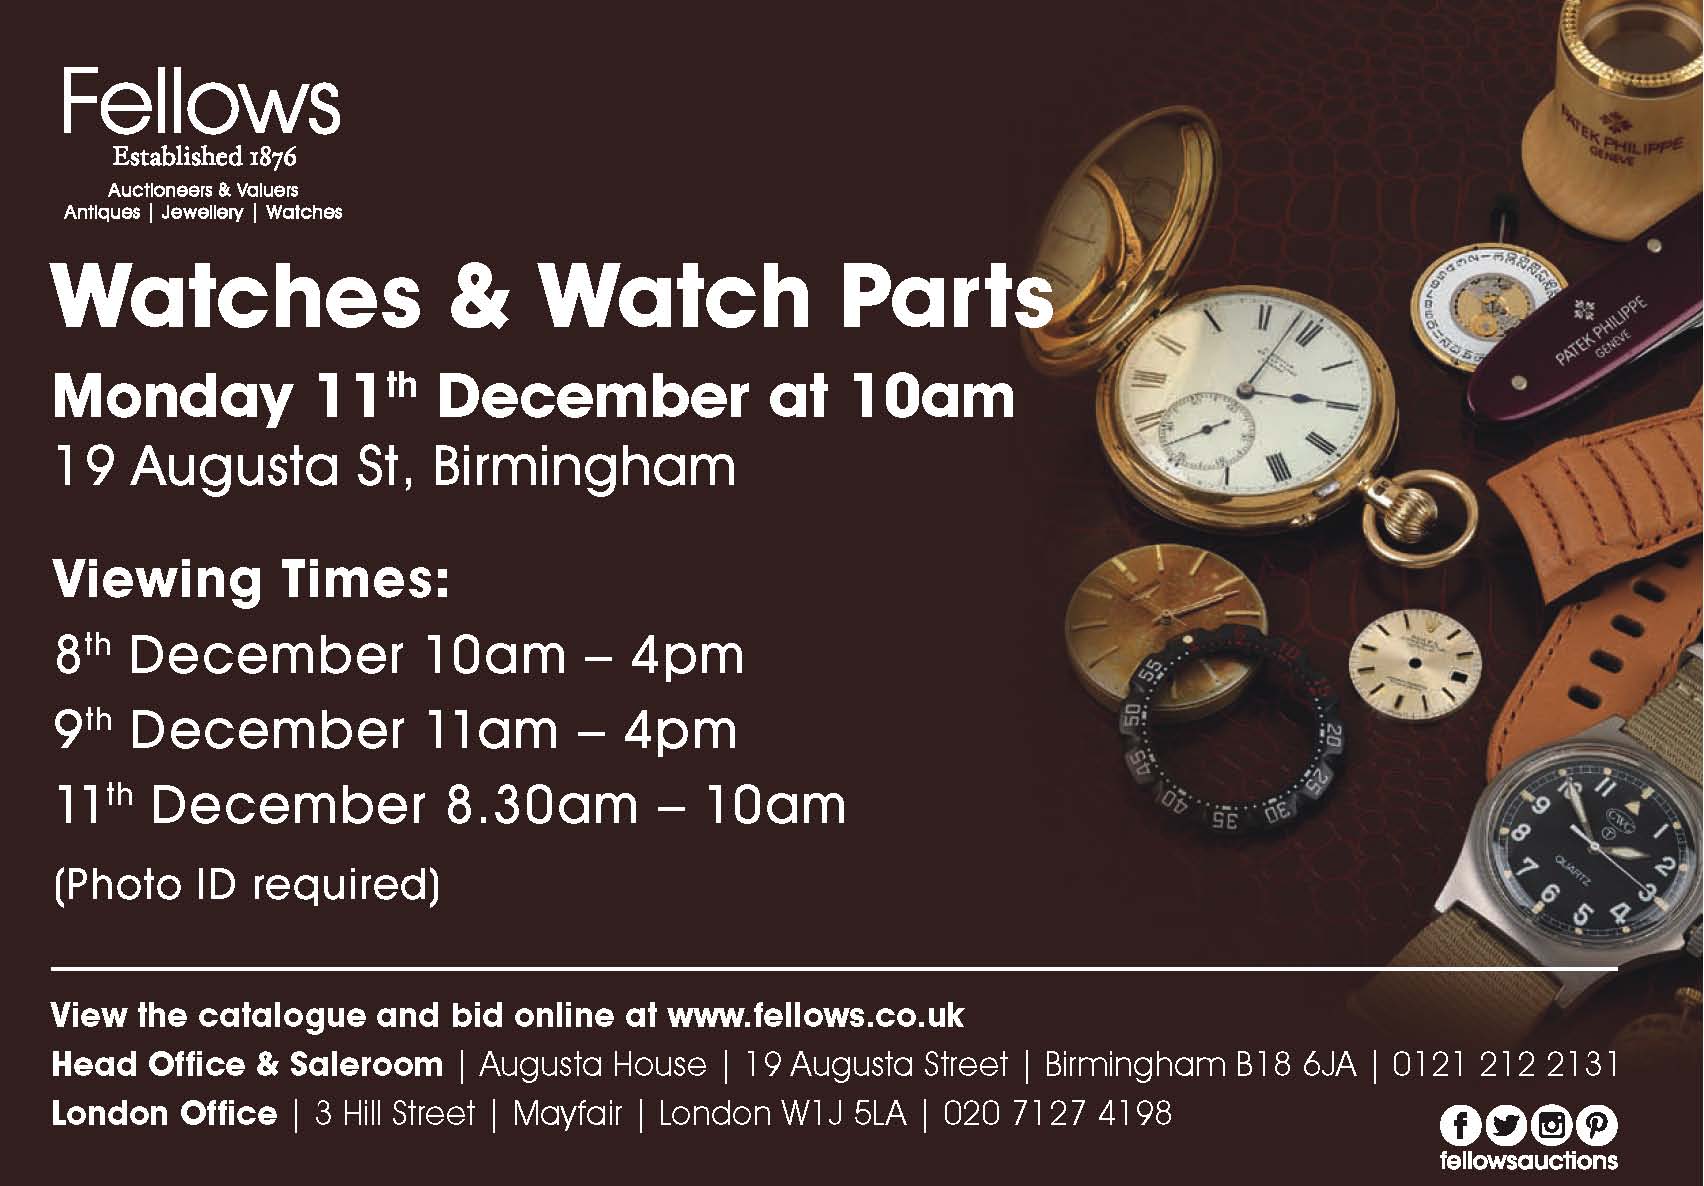 Fellows - Watches & Watch Parts.jpg